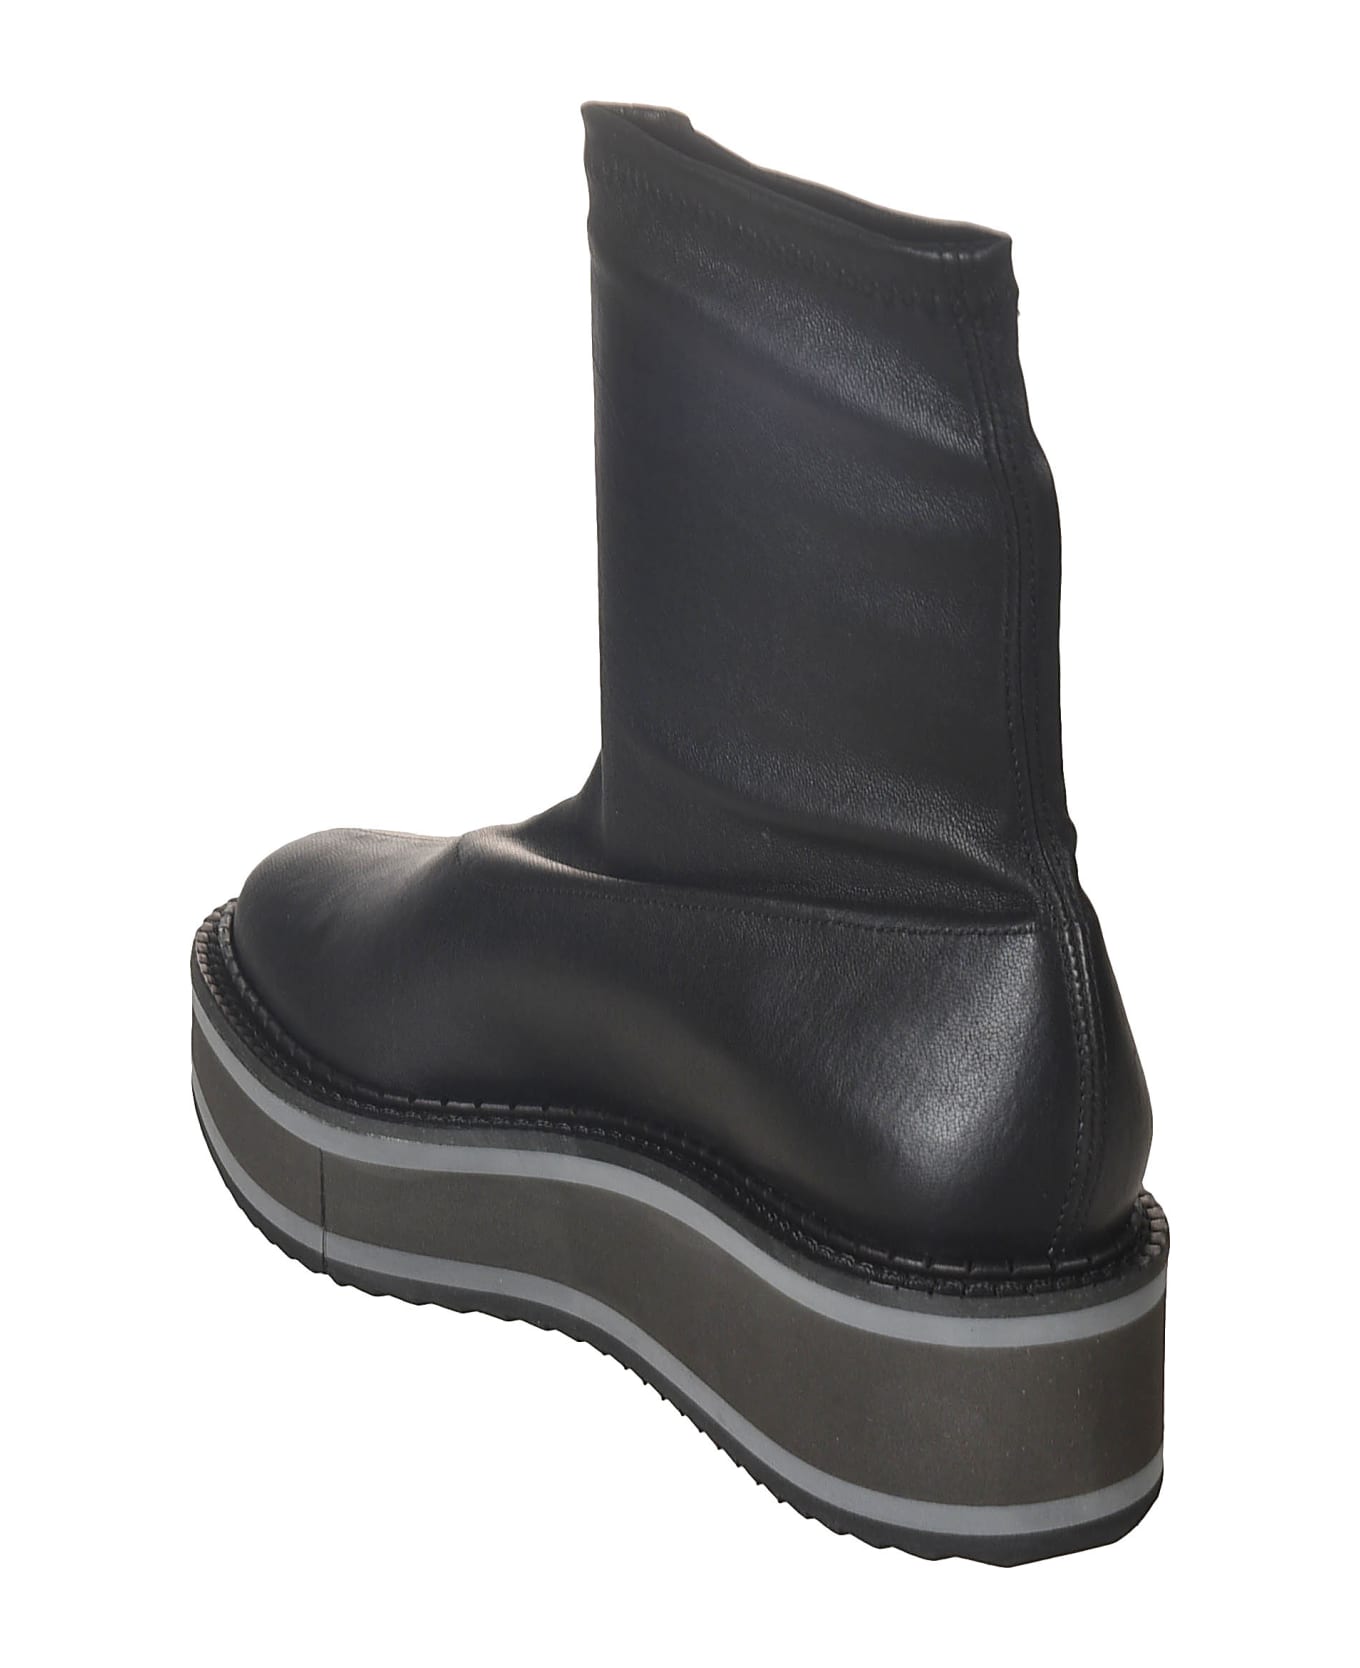 Clergerie Berta Wedge Boots - Black ブーツ